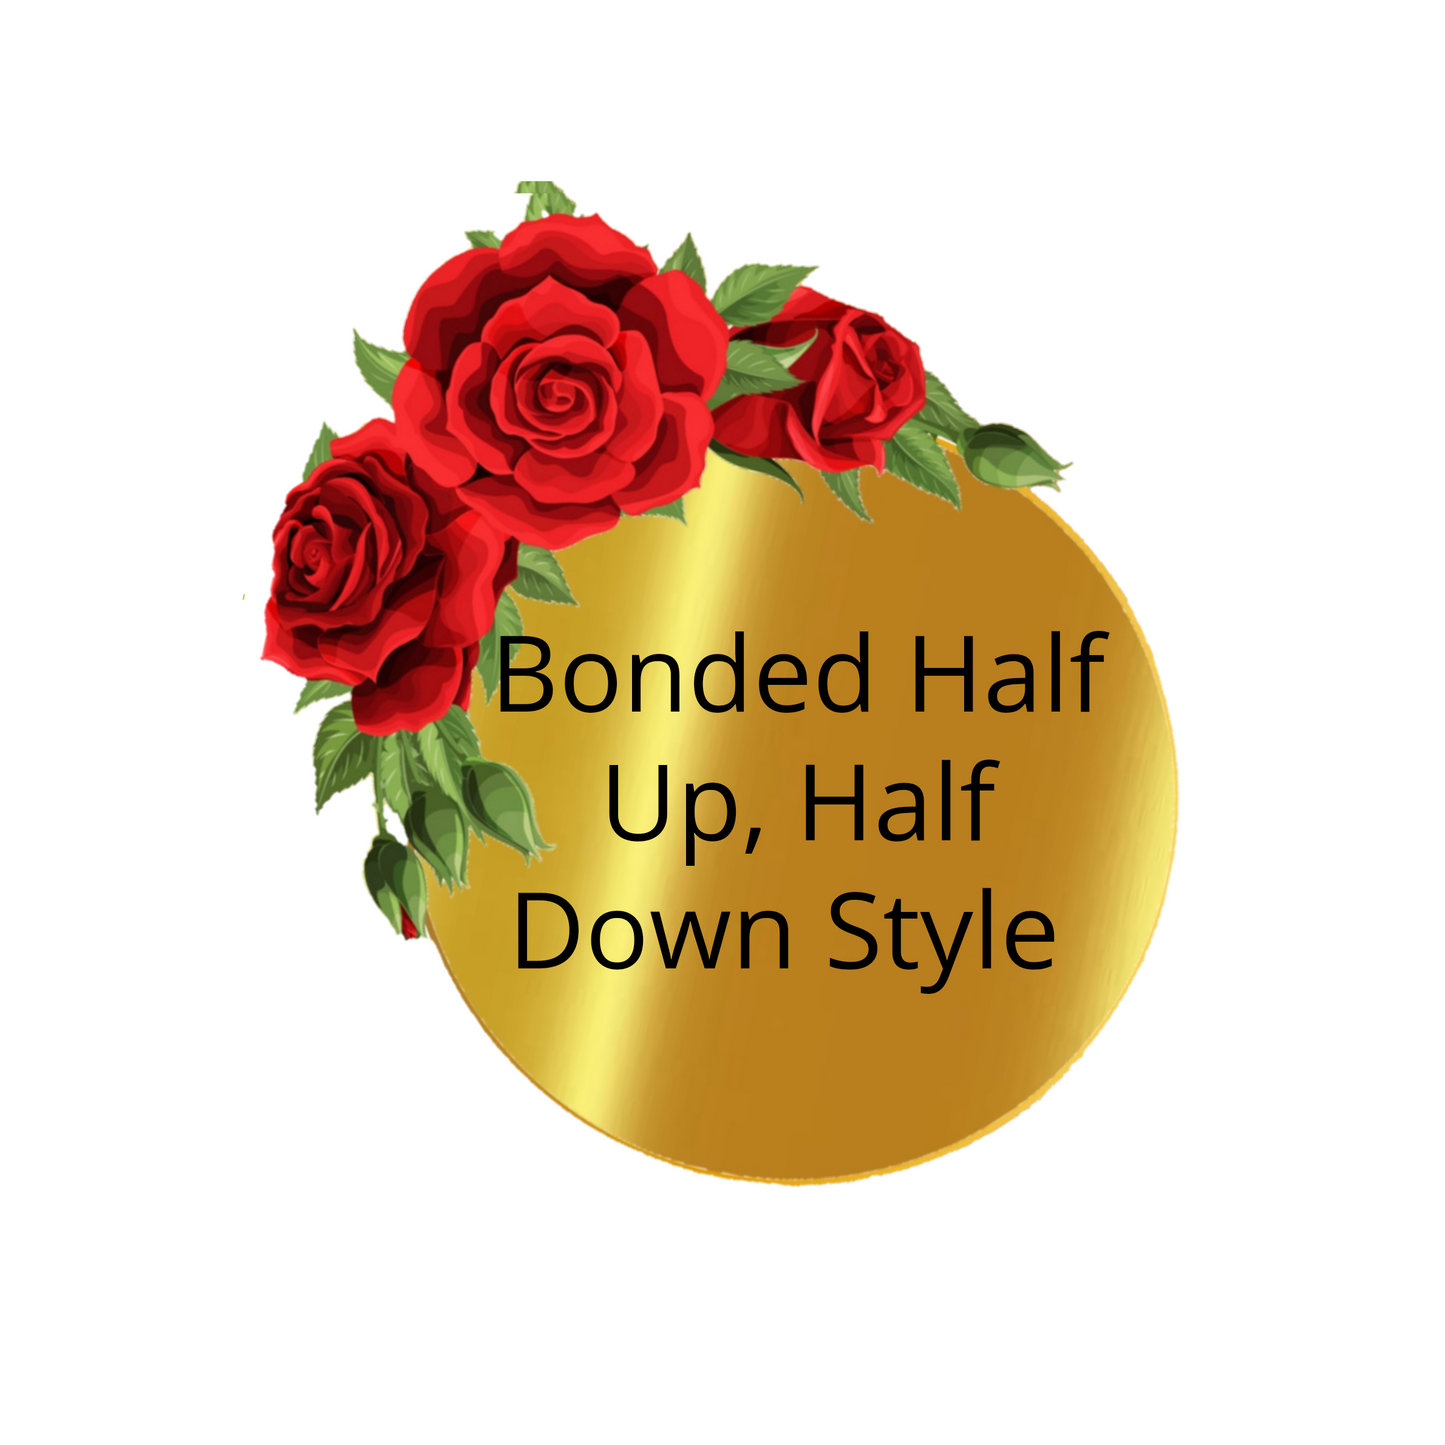 Bonded (Glue Adhesive) Half Up, Half Down Style